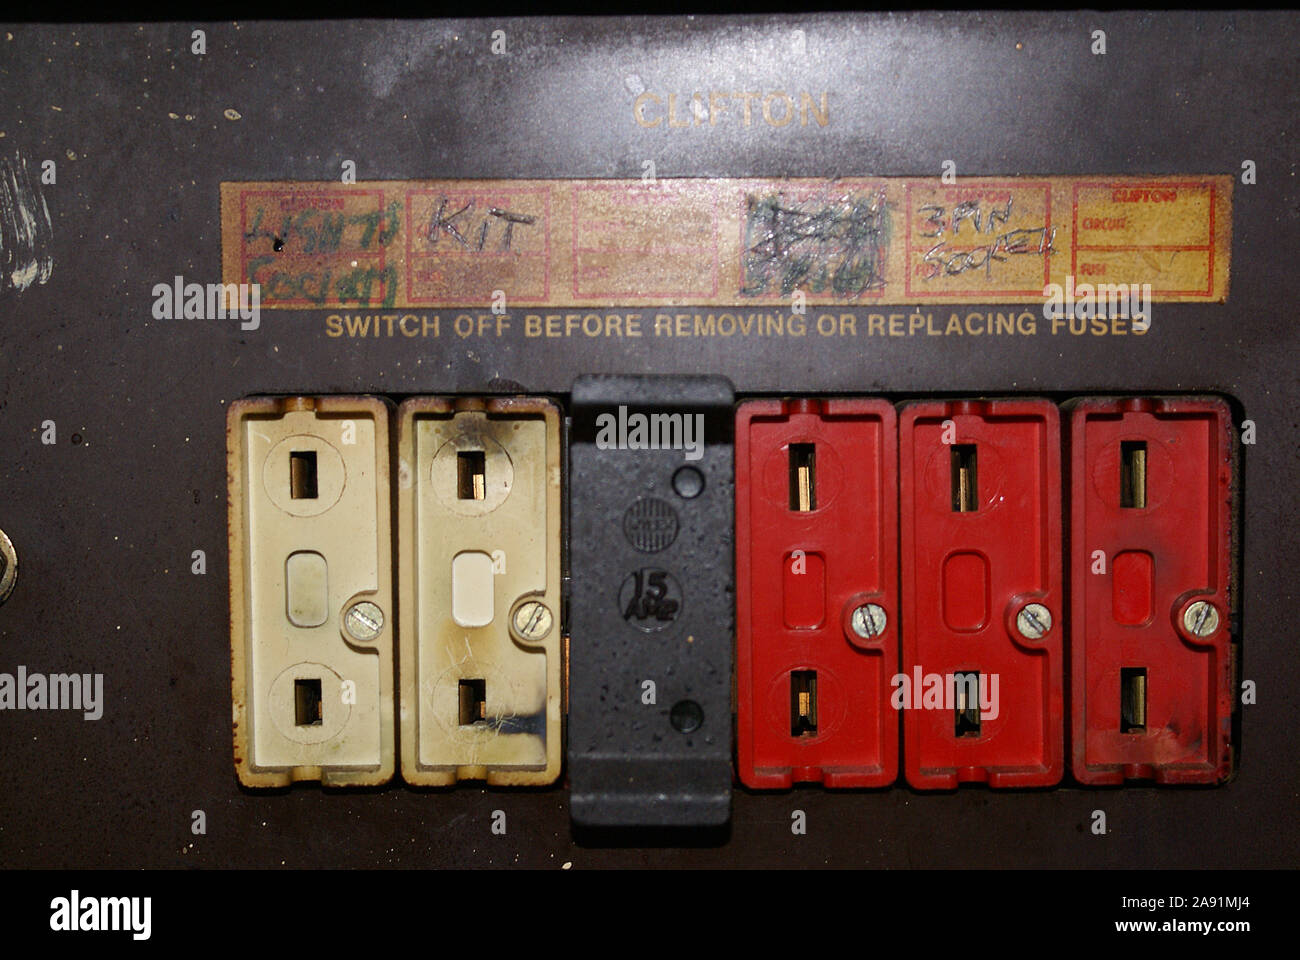 faulty electrics, electrical fire hazard Stock Photo